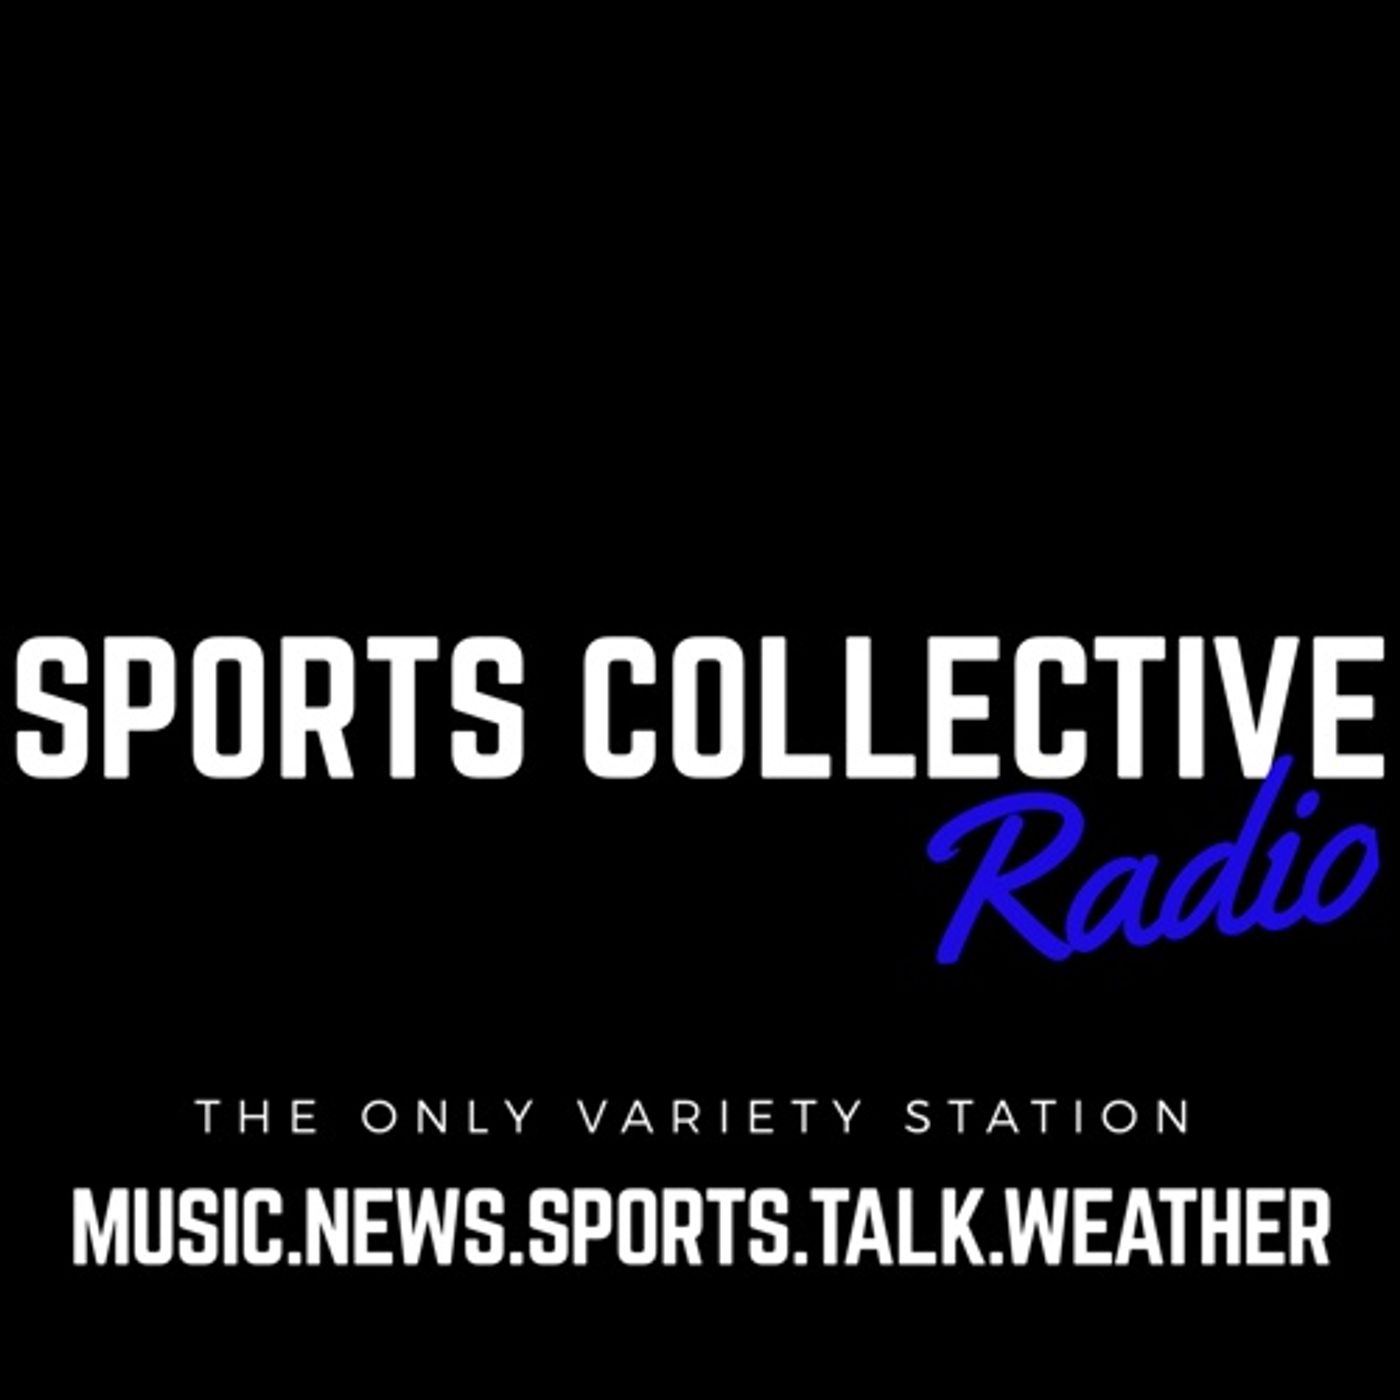 Sports Collective Radio's show